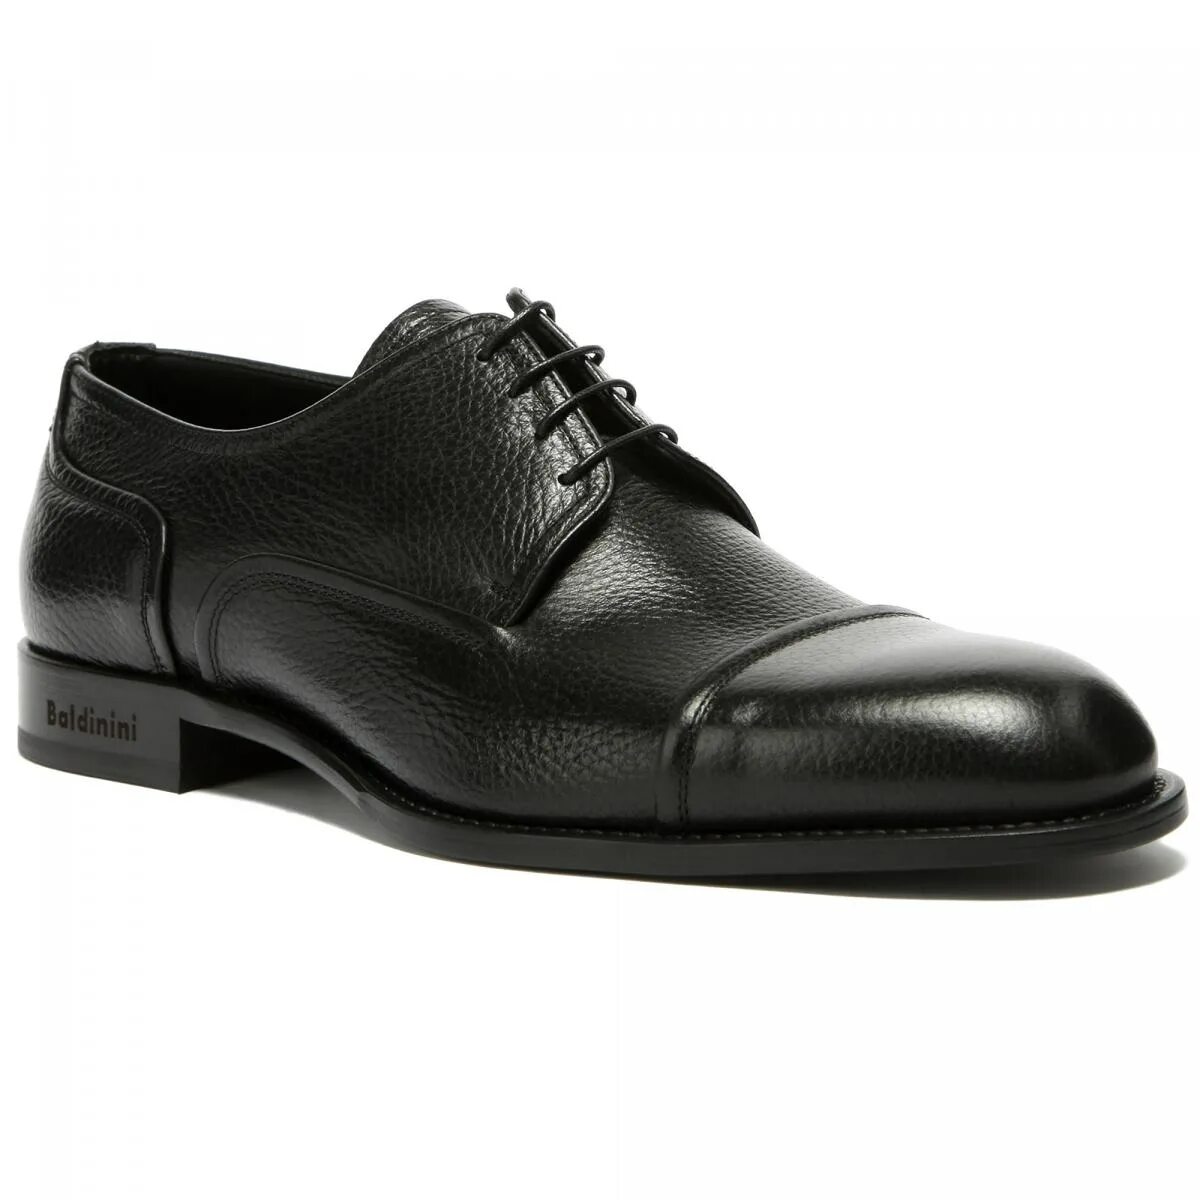 Baldinini 847033 42 обувь мужская туфли. Baldinini мужские 44. Туфли мужские арт 840712/ Baldinini. Балдини ботинки бренд мужские.